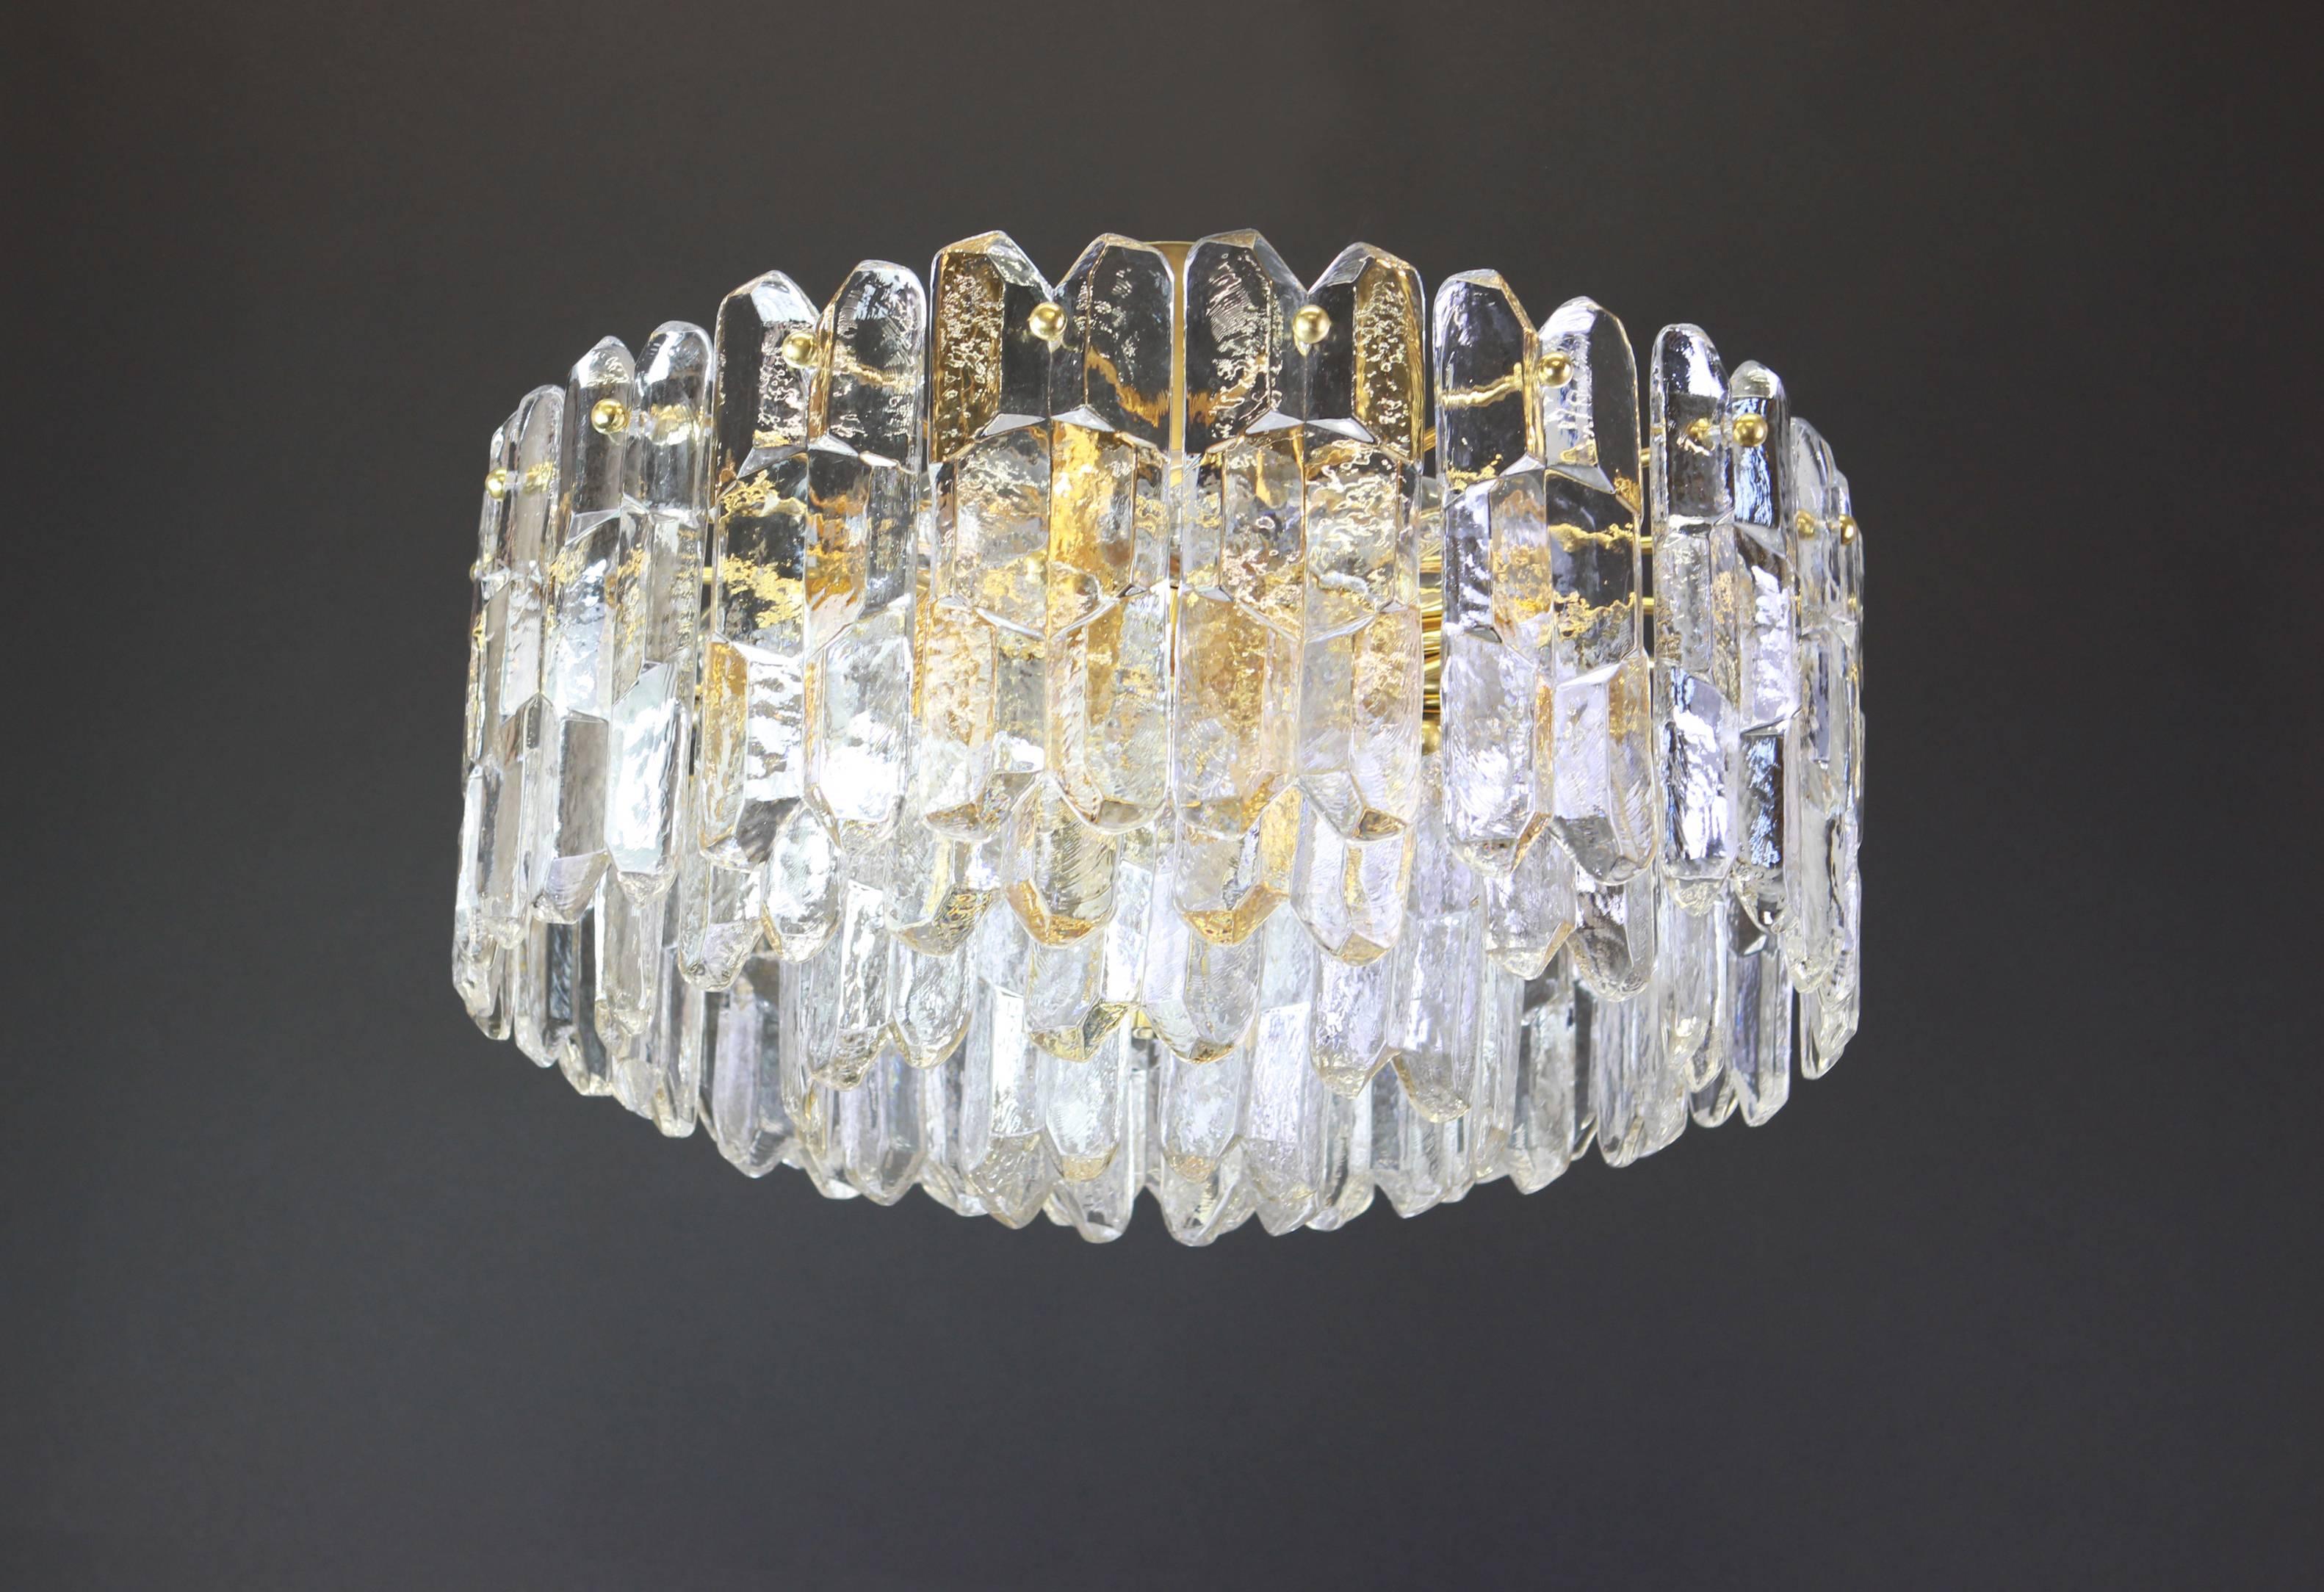 Late 20th Century Stunning Gilt Brass, Crystal Glass Light Fixture Palazzo, Kalmar, Austria, 1970 For Sale